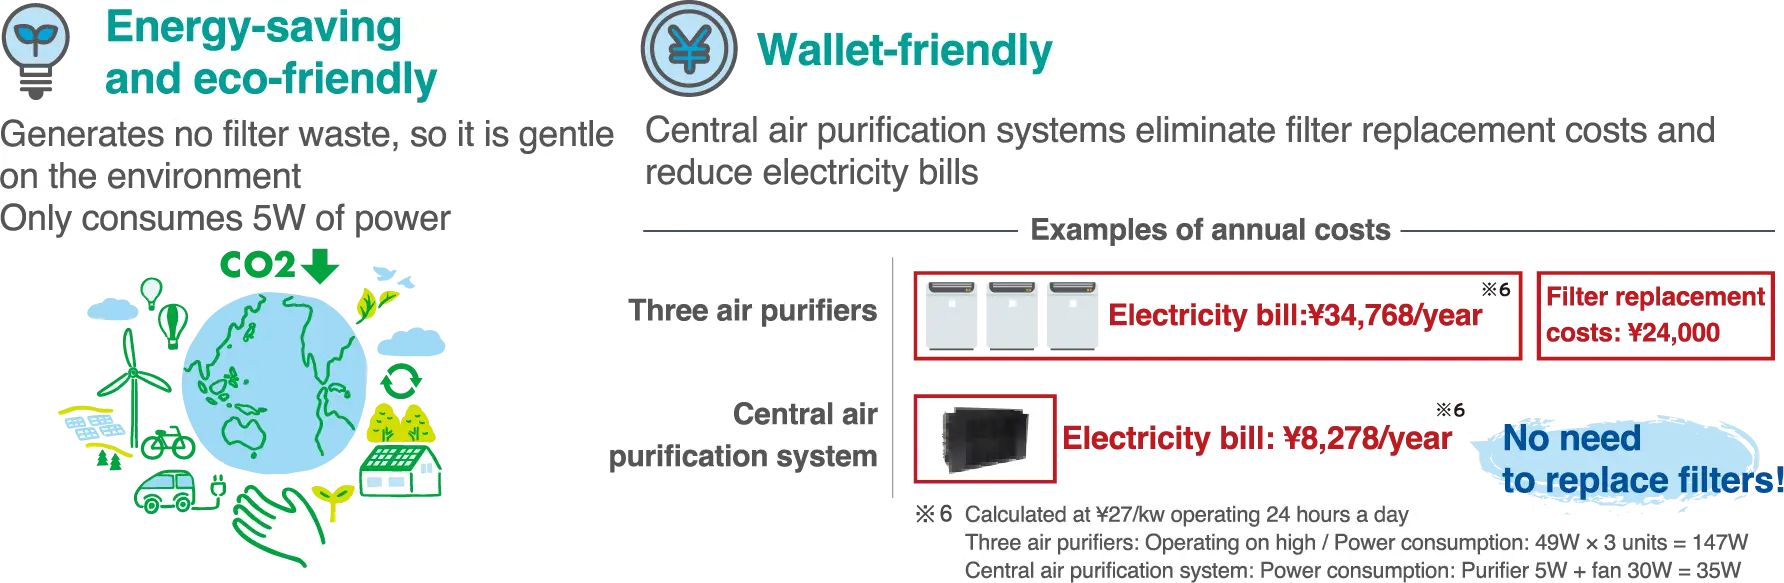 Energy-saving & eco-friendly / Wallet-friendly